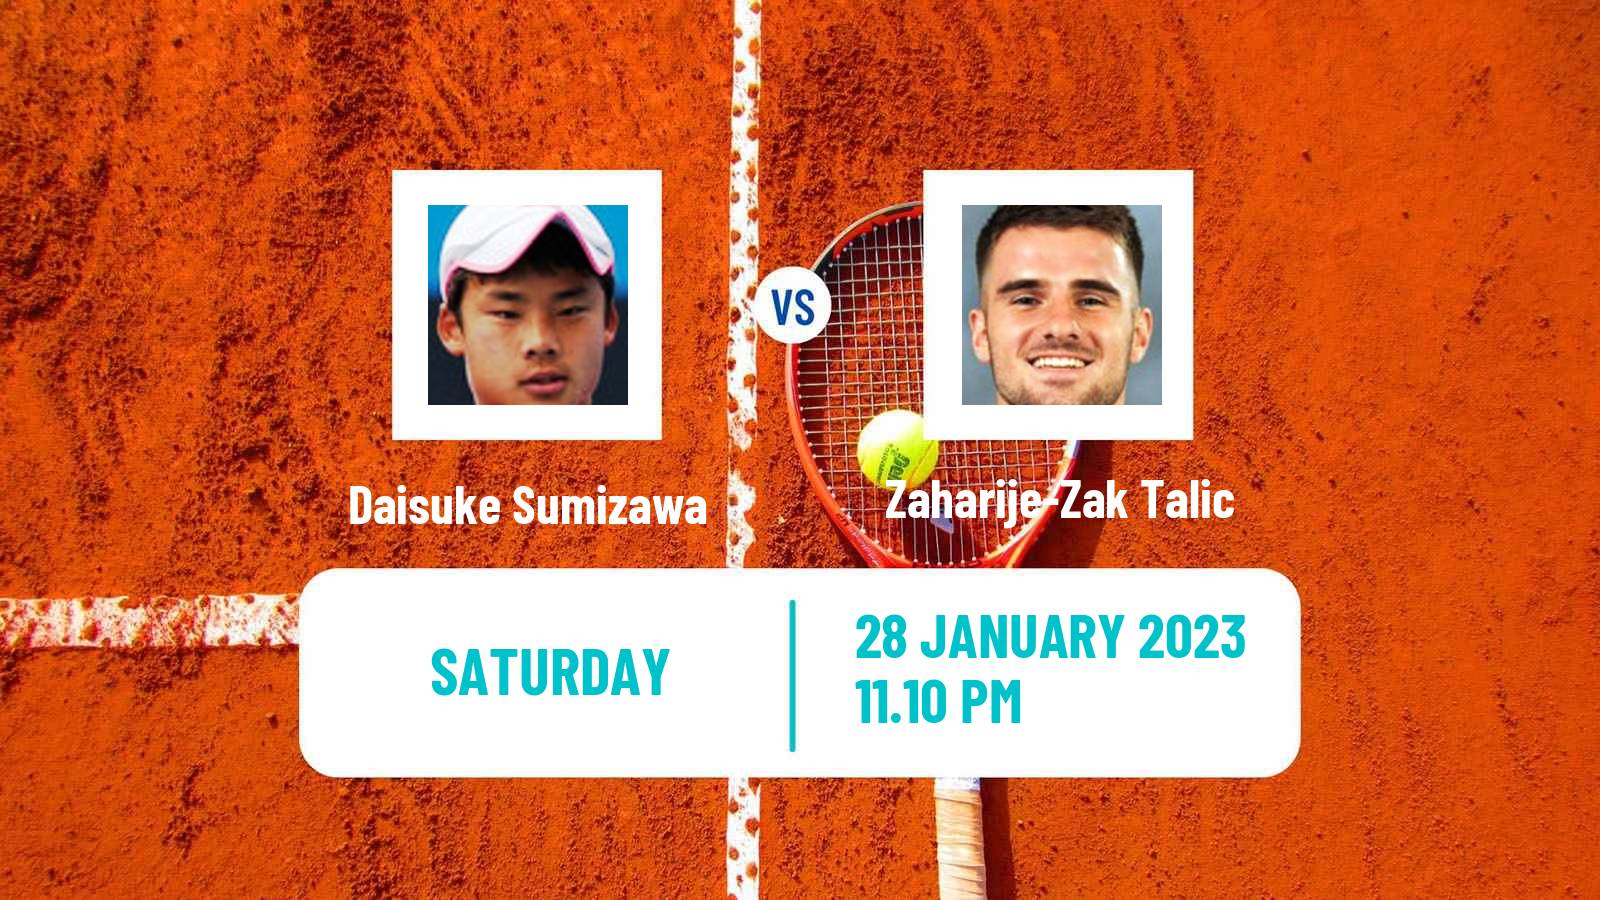 Tennis ATP Challenger Daisuke Sumizawa - Zaharije-Zak Talic